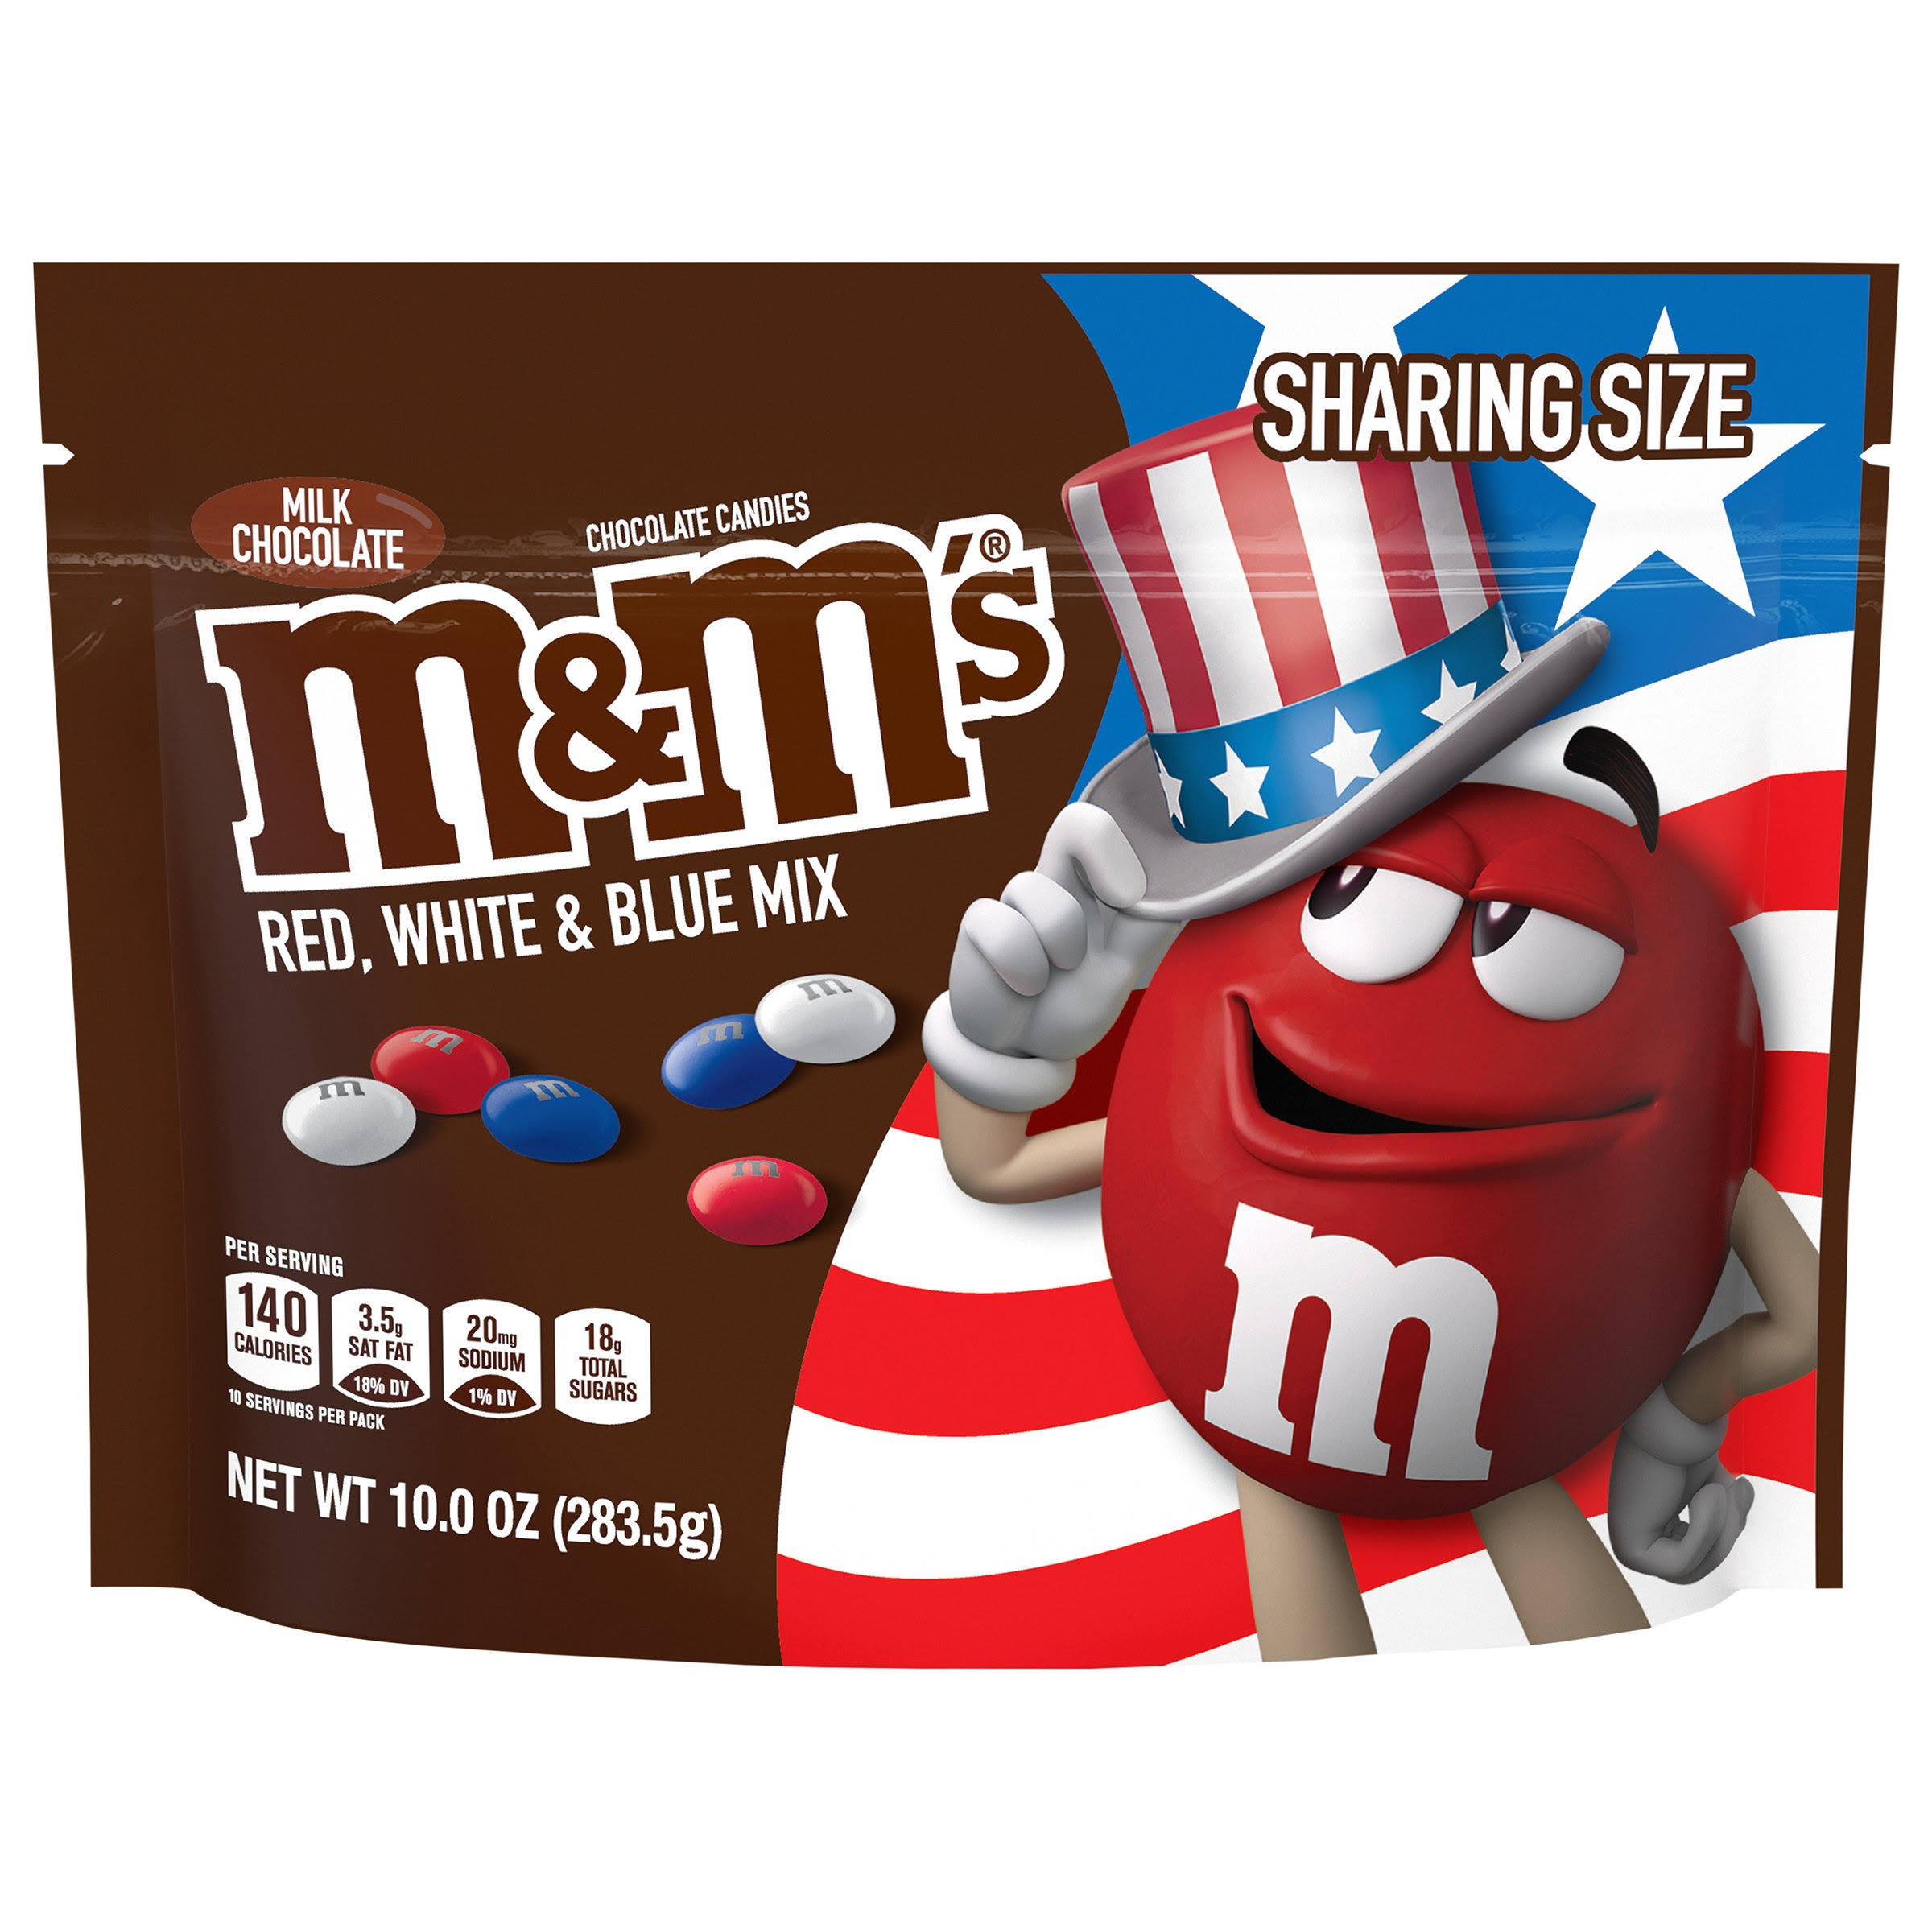 M&M's Chocolate Candies, Red, White & Blue Mix, Milk Chocolate, Sharing Size - 10.0 oz